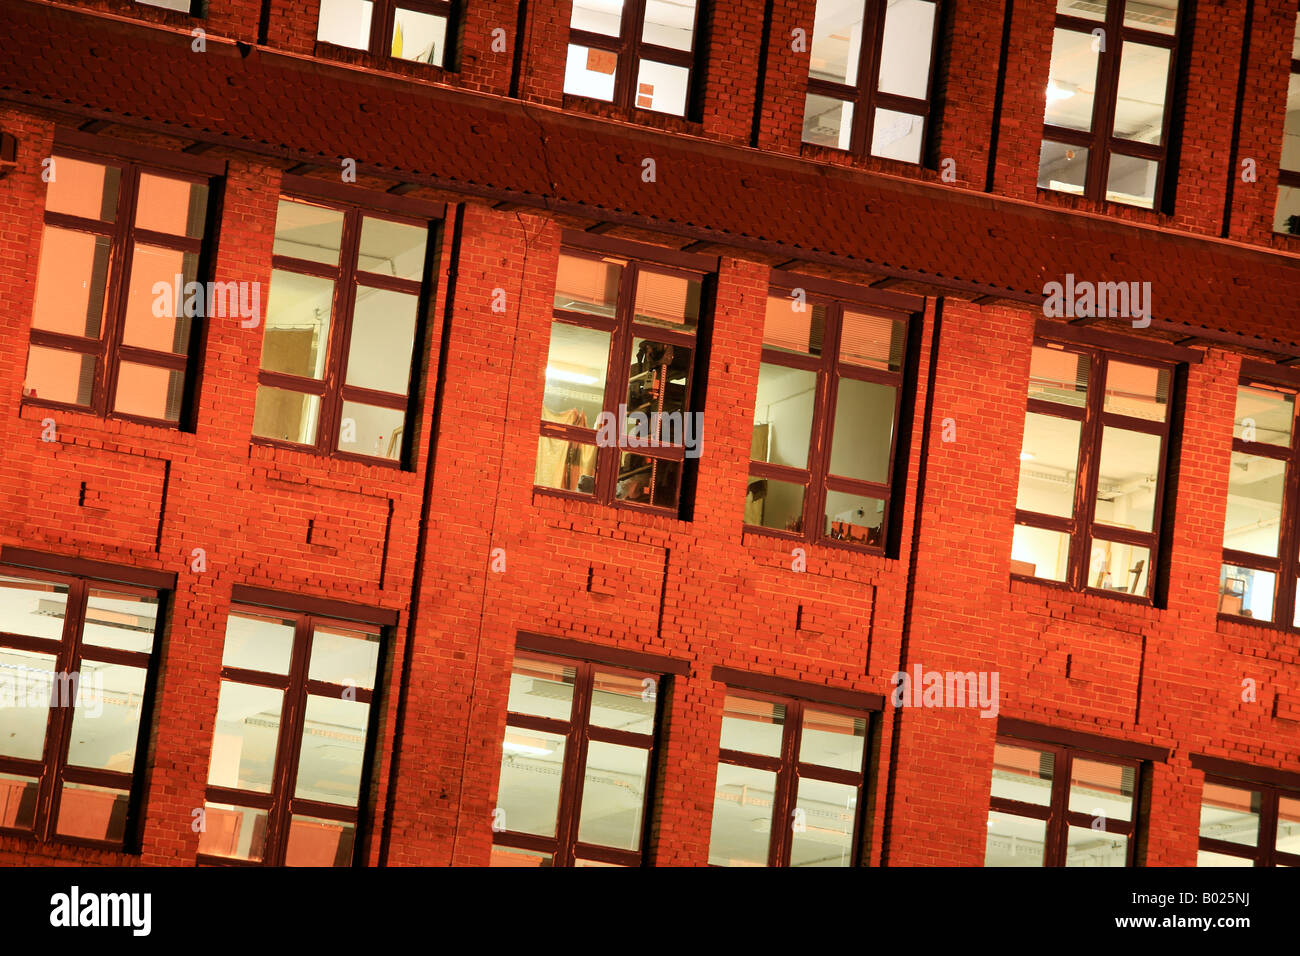 beleuchteten roten Backsteinfassade einer alten umgebauten Fabrik Gebäude, Druckerei Hermes Druck, Halle (Saale), Deutschland Stockfoto